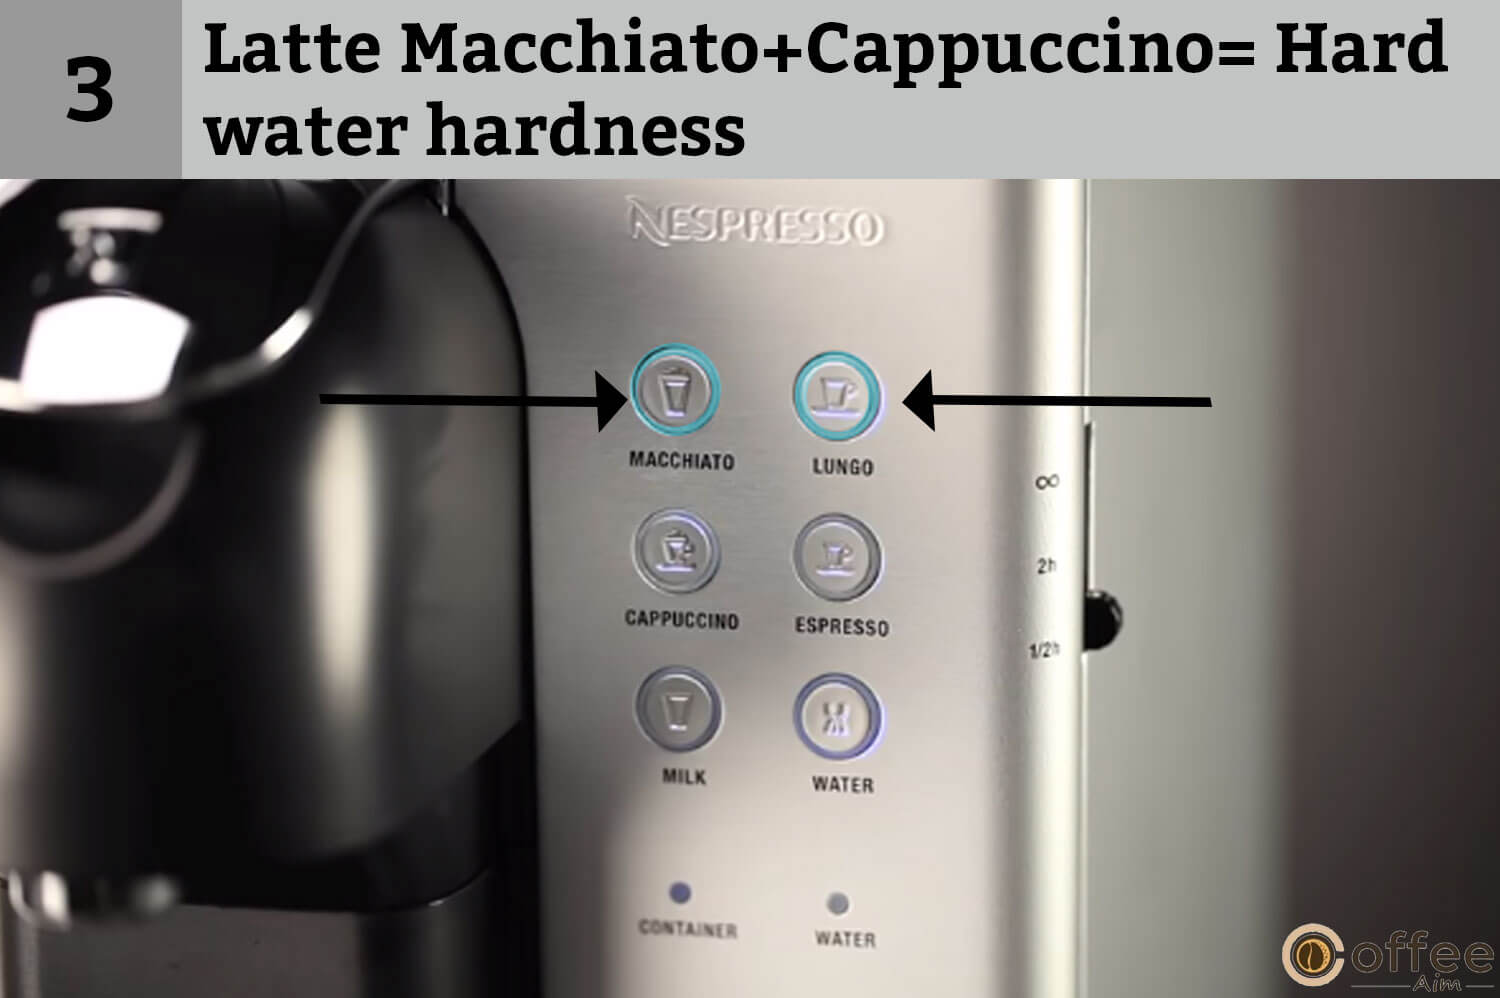 How To Use A Nespresso Lattissima Plus